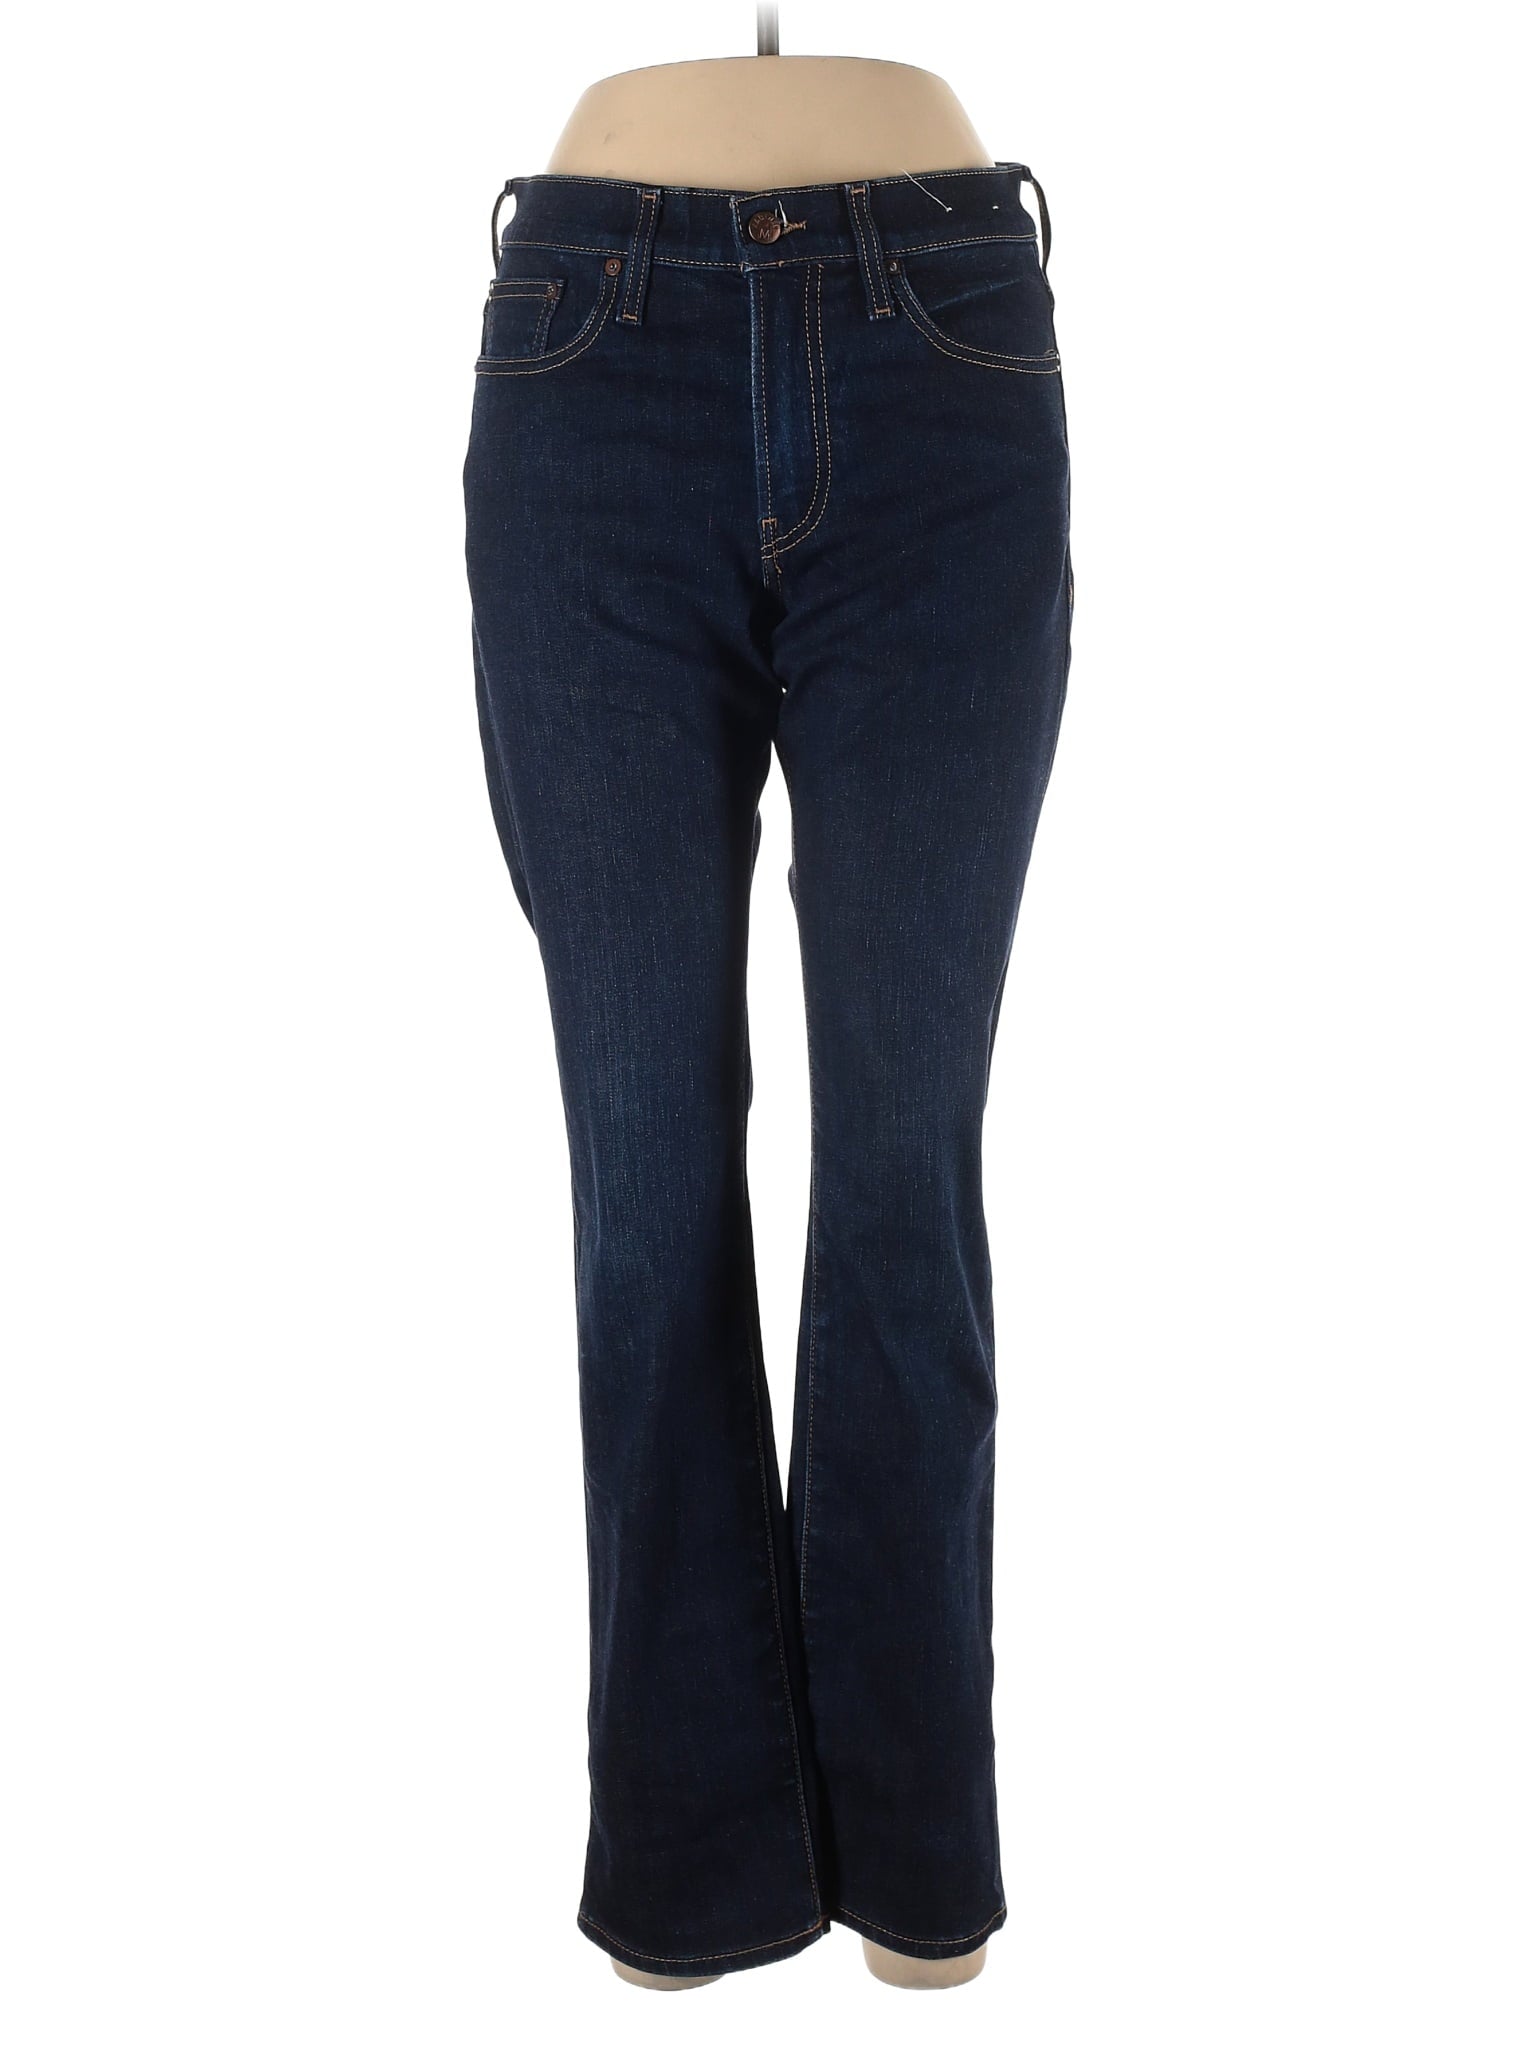 High-Rise Jeans waist size - 30